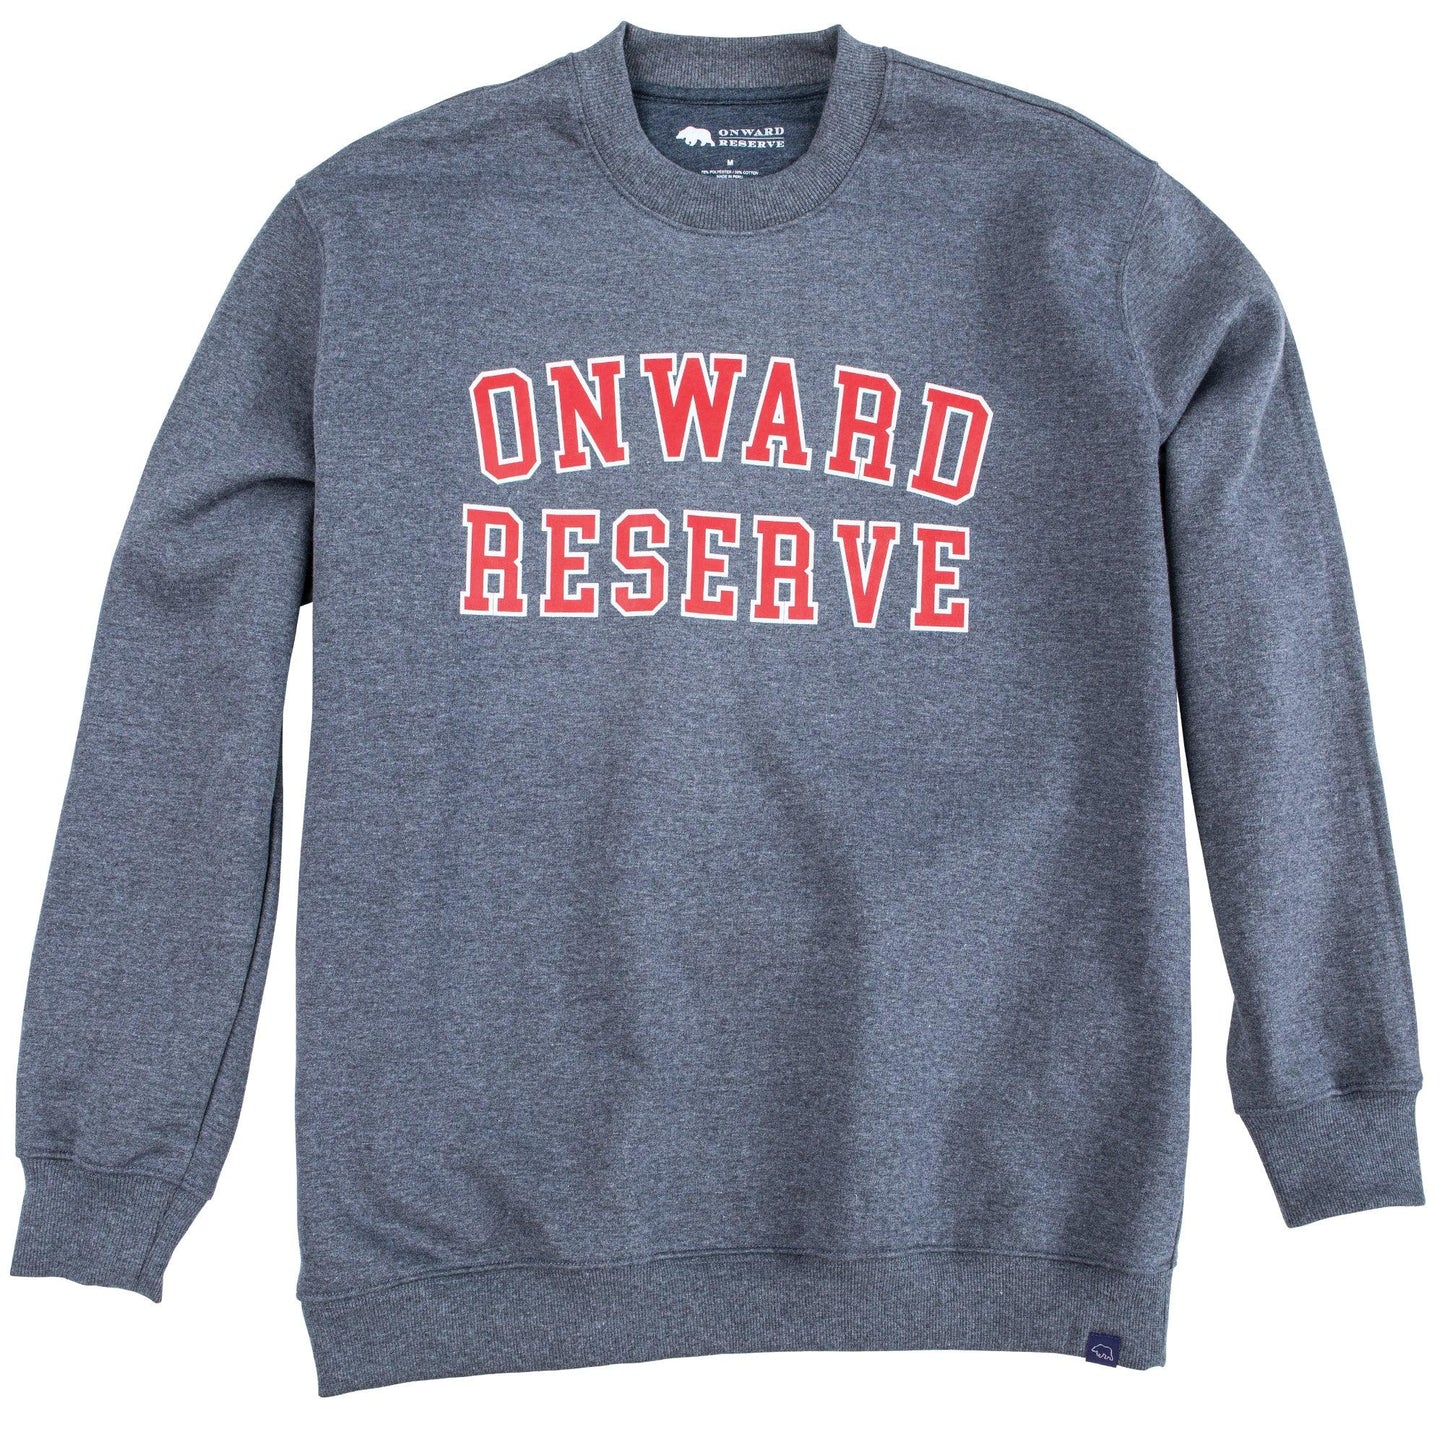 Onward Reserve Vintage Crewneck Sweatshirt - Navy/Salsa - Onward Reserve